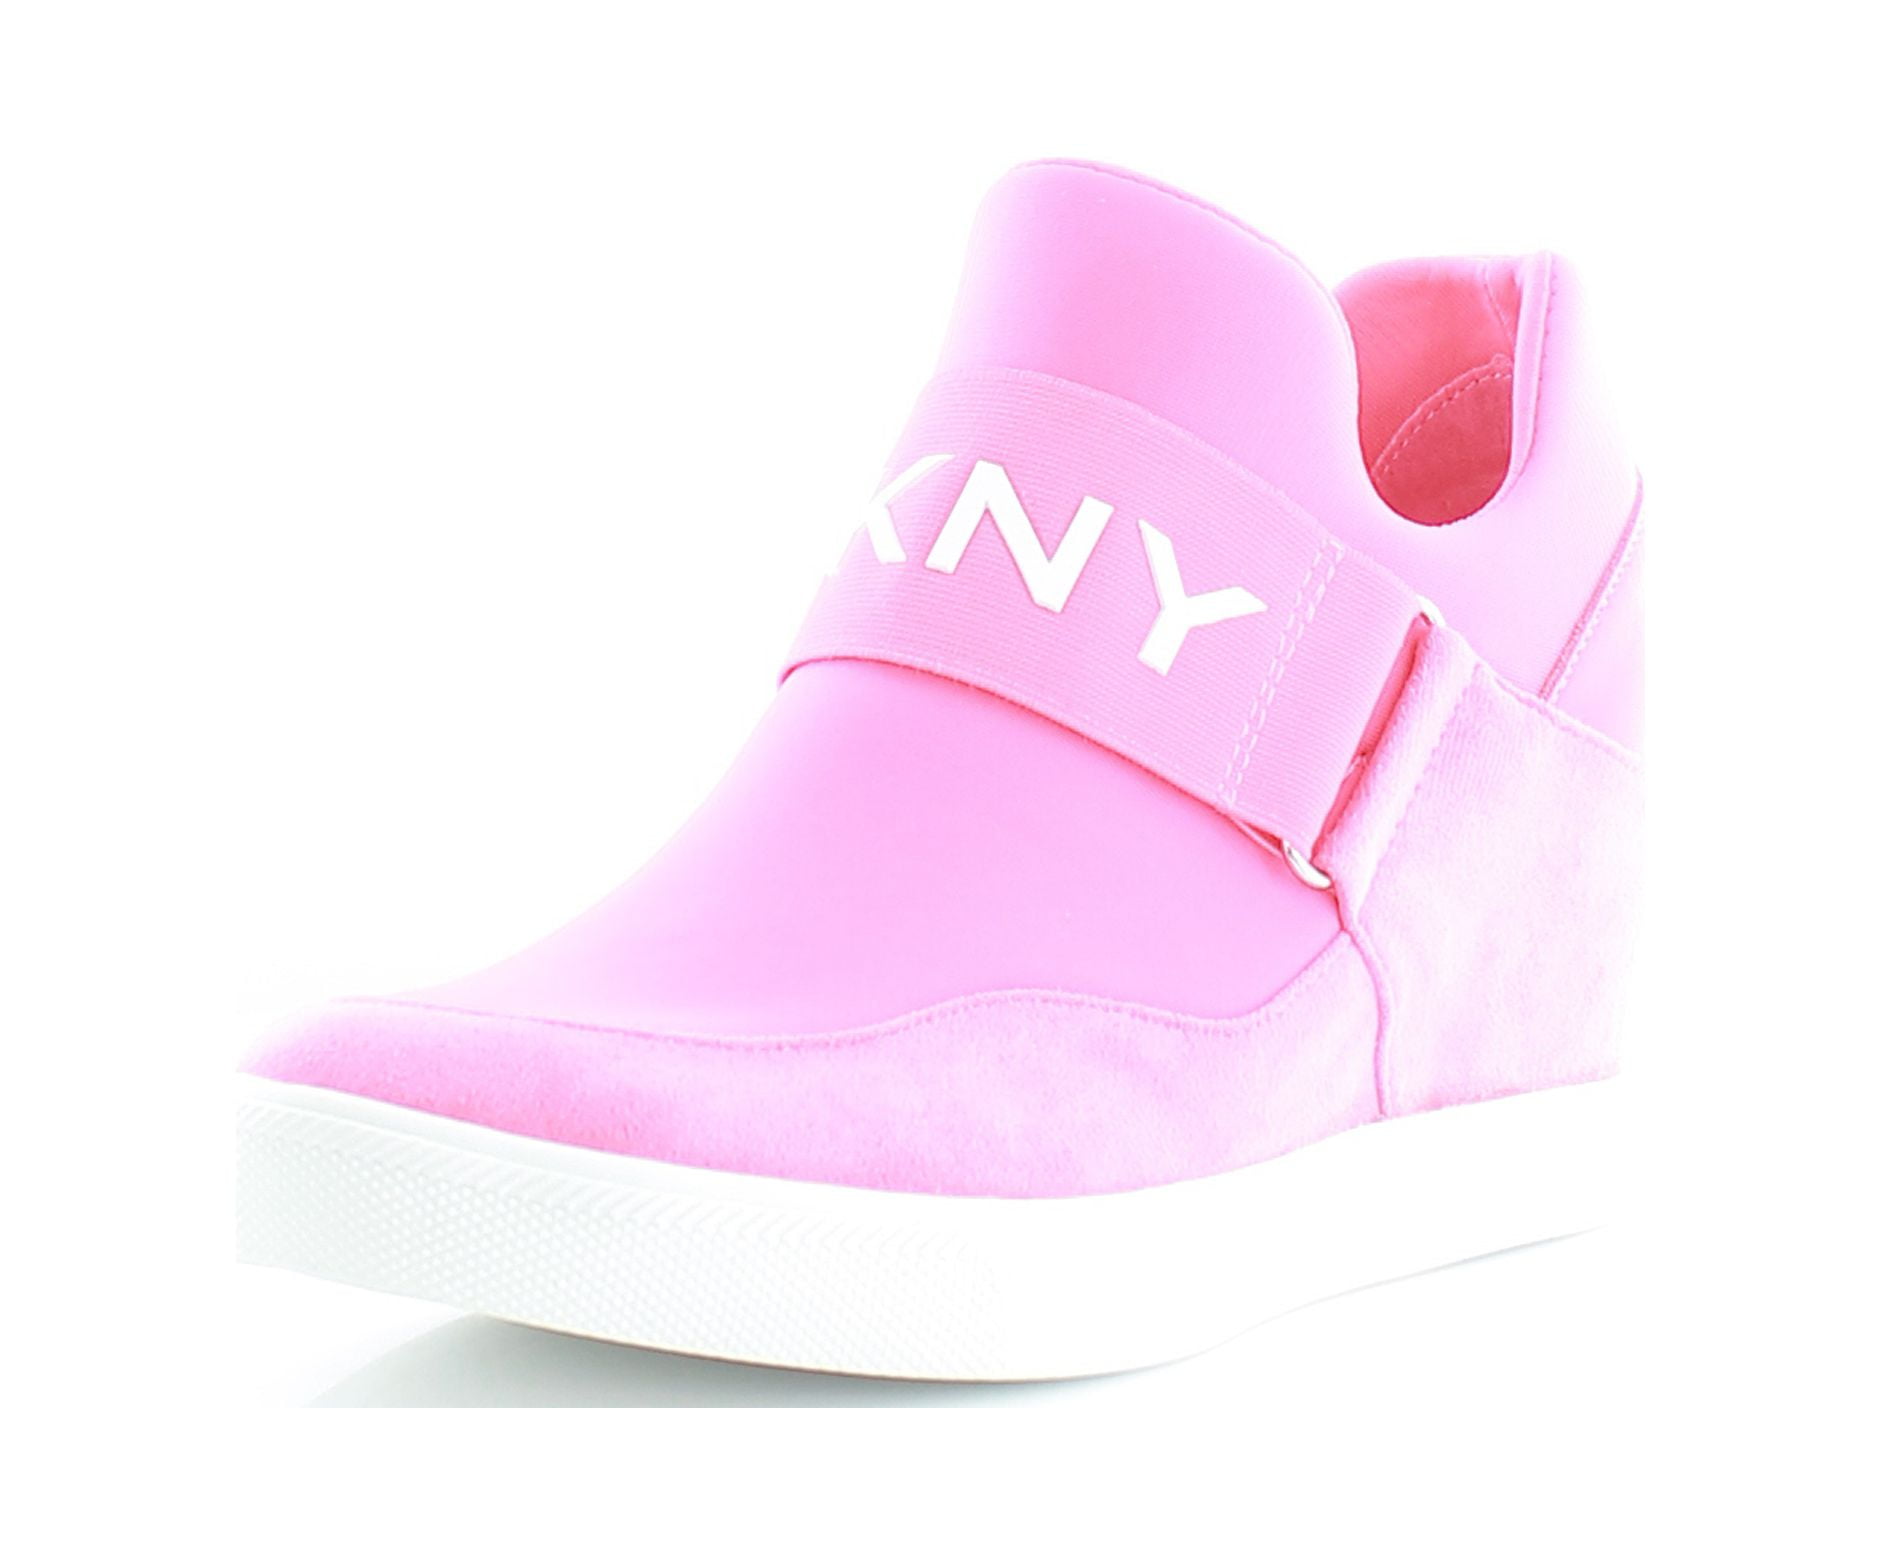 DKNY Cosmos Women's Fashion Sneakers Fuchsia Size 6.5 M Walmart.com